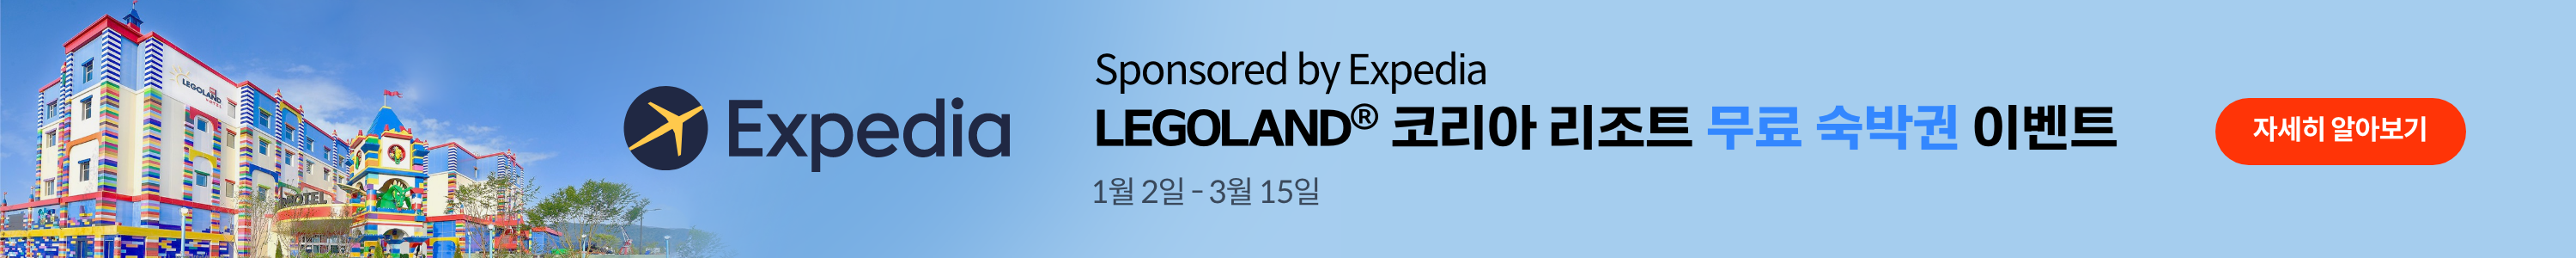 expedia-legoland_bar-banner_web